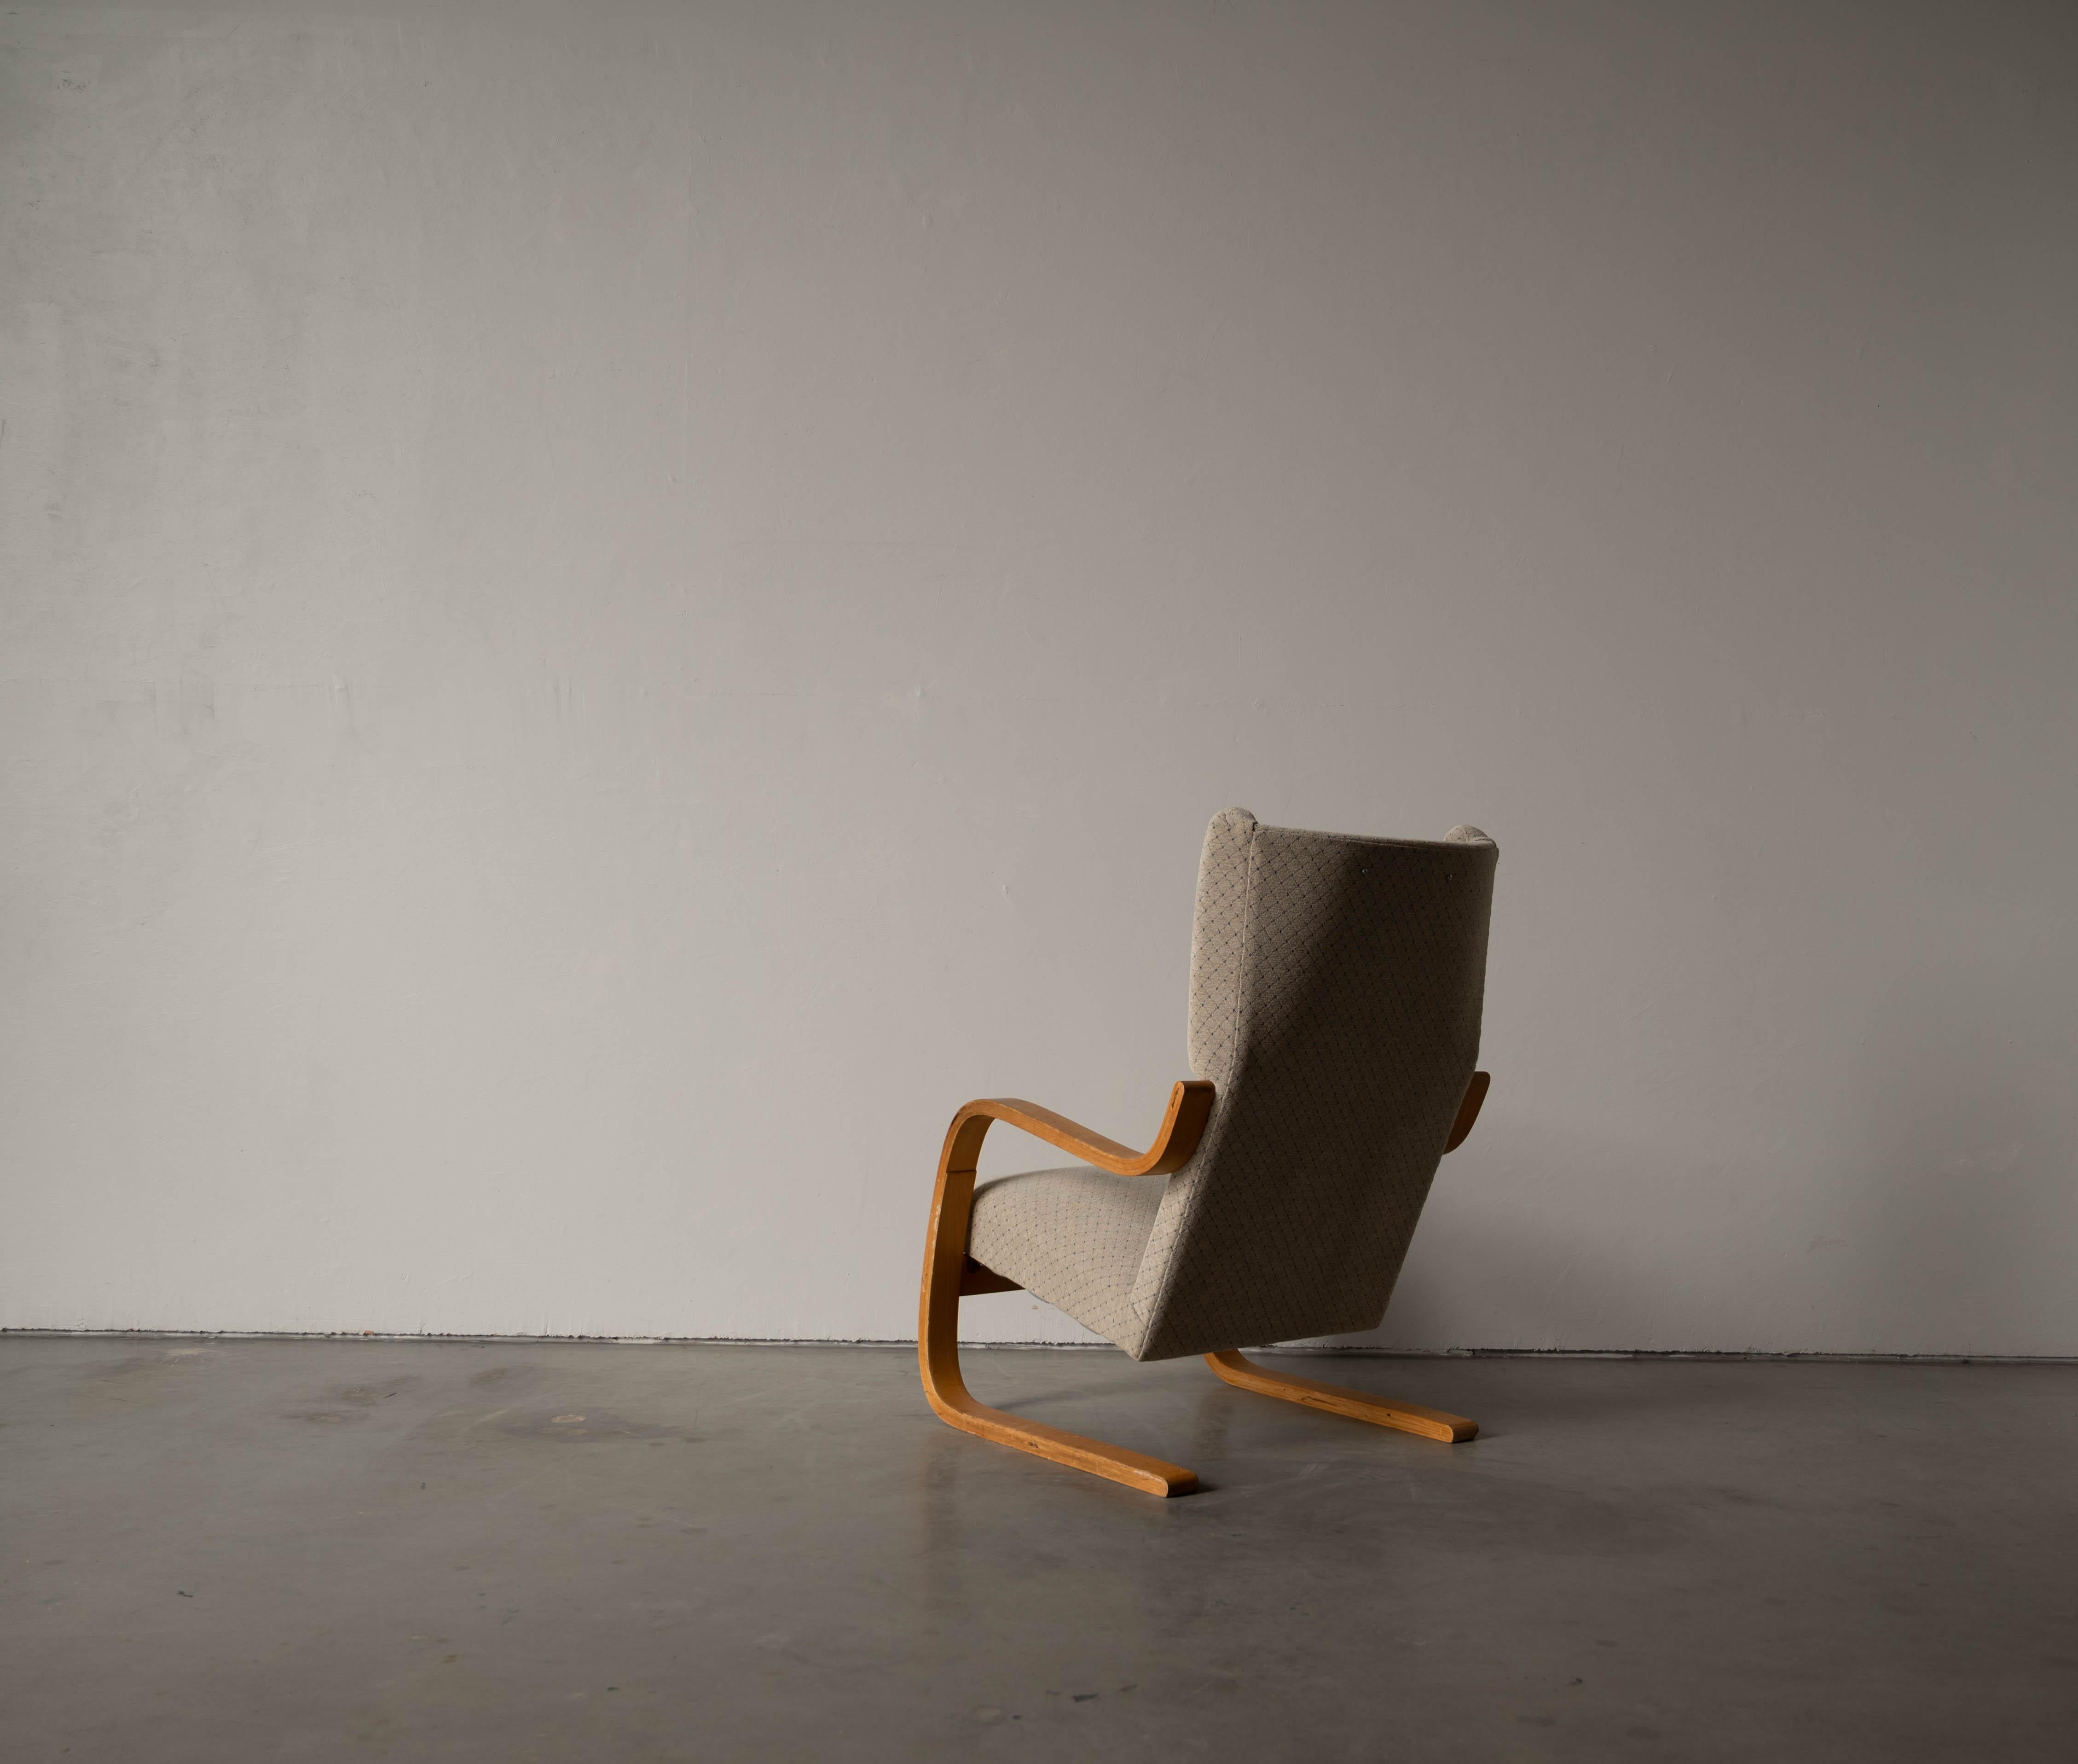 Late 20th Century Alvar Aalto, Lounge Chair, Birch, Fabric, Artek, Finland, c. 1970s